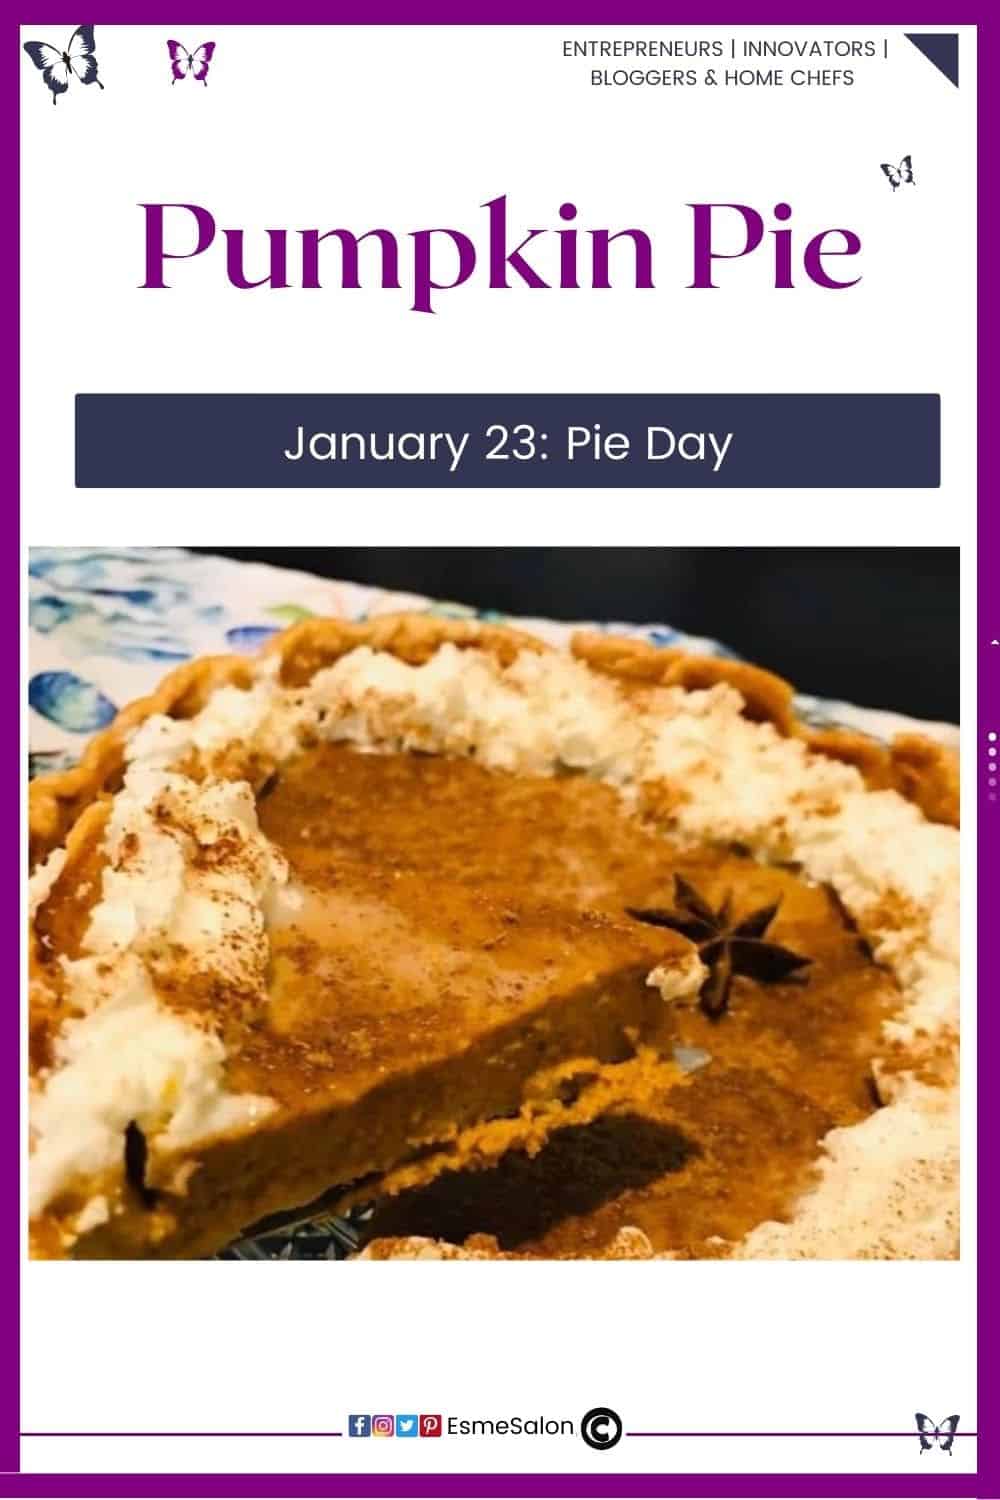 an image of a Pumpkin Pie for Thanksgiving